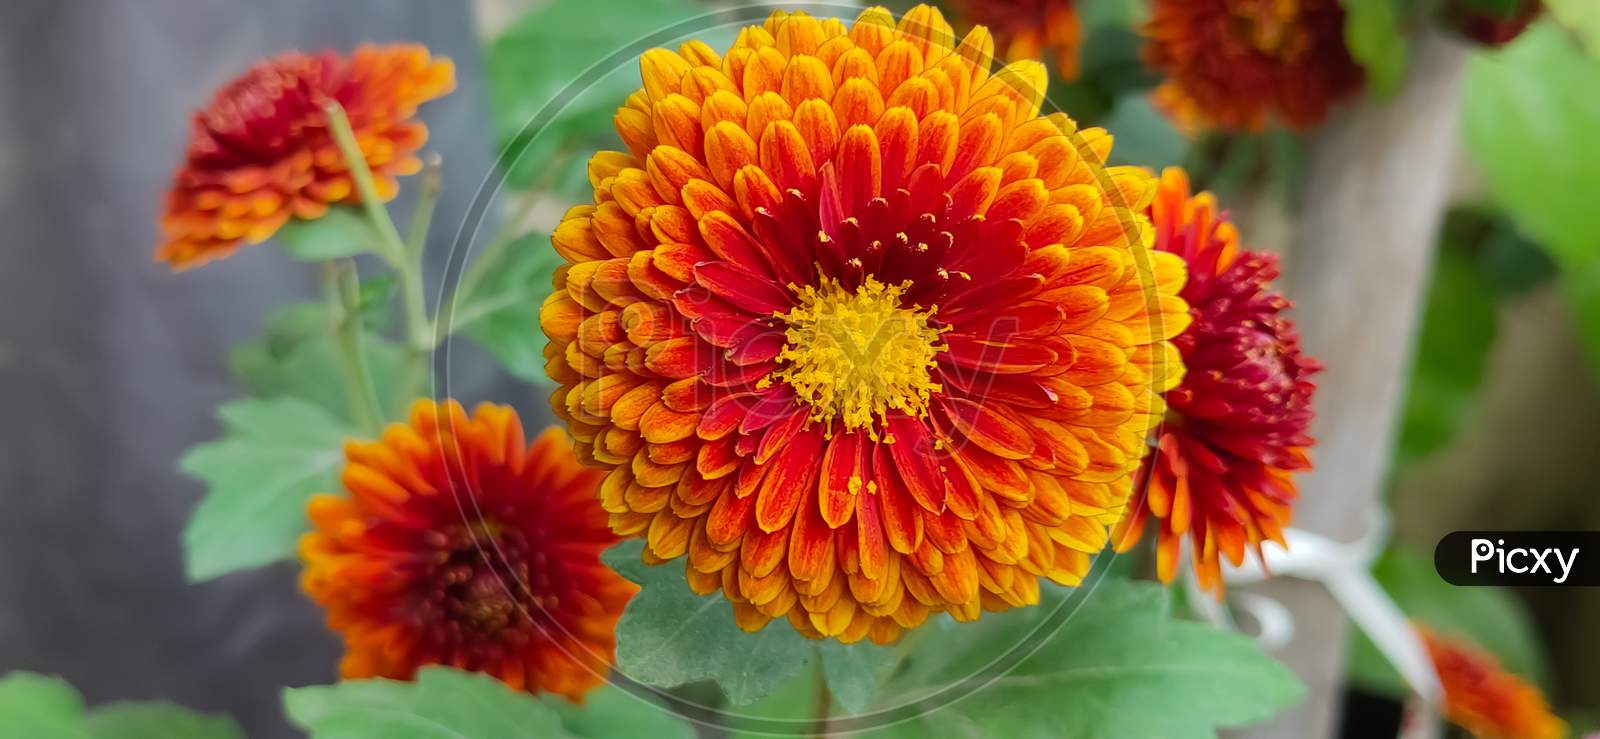 Photo of a beautiful Chrysanthemum flower close up